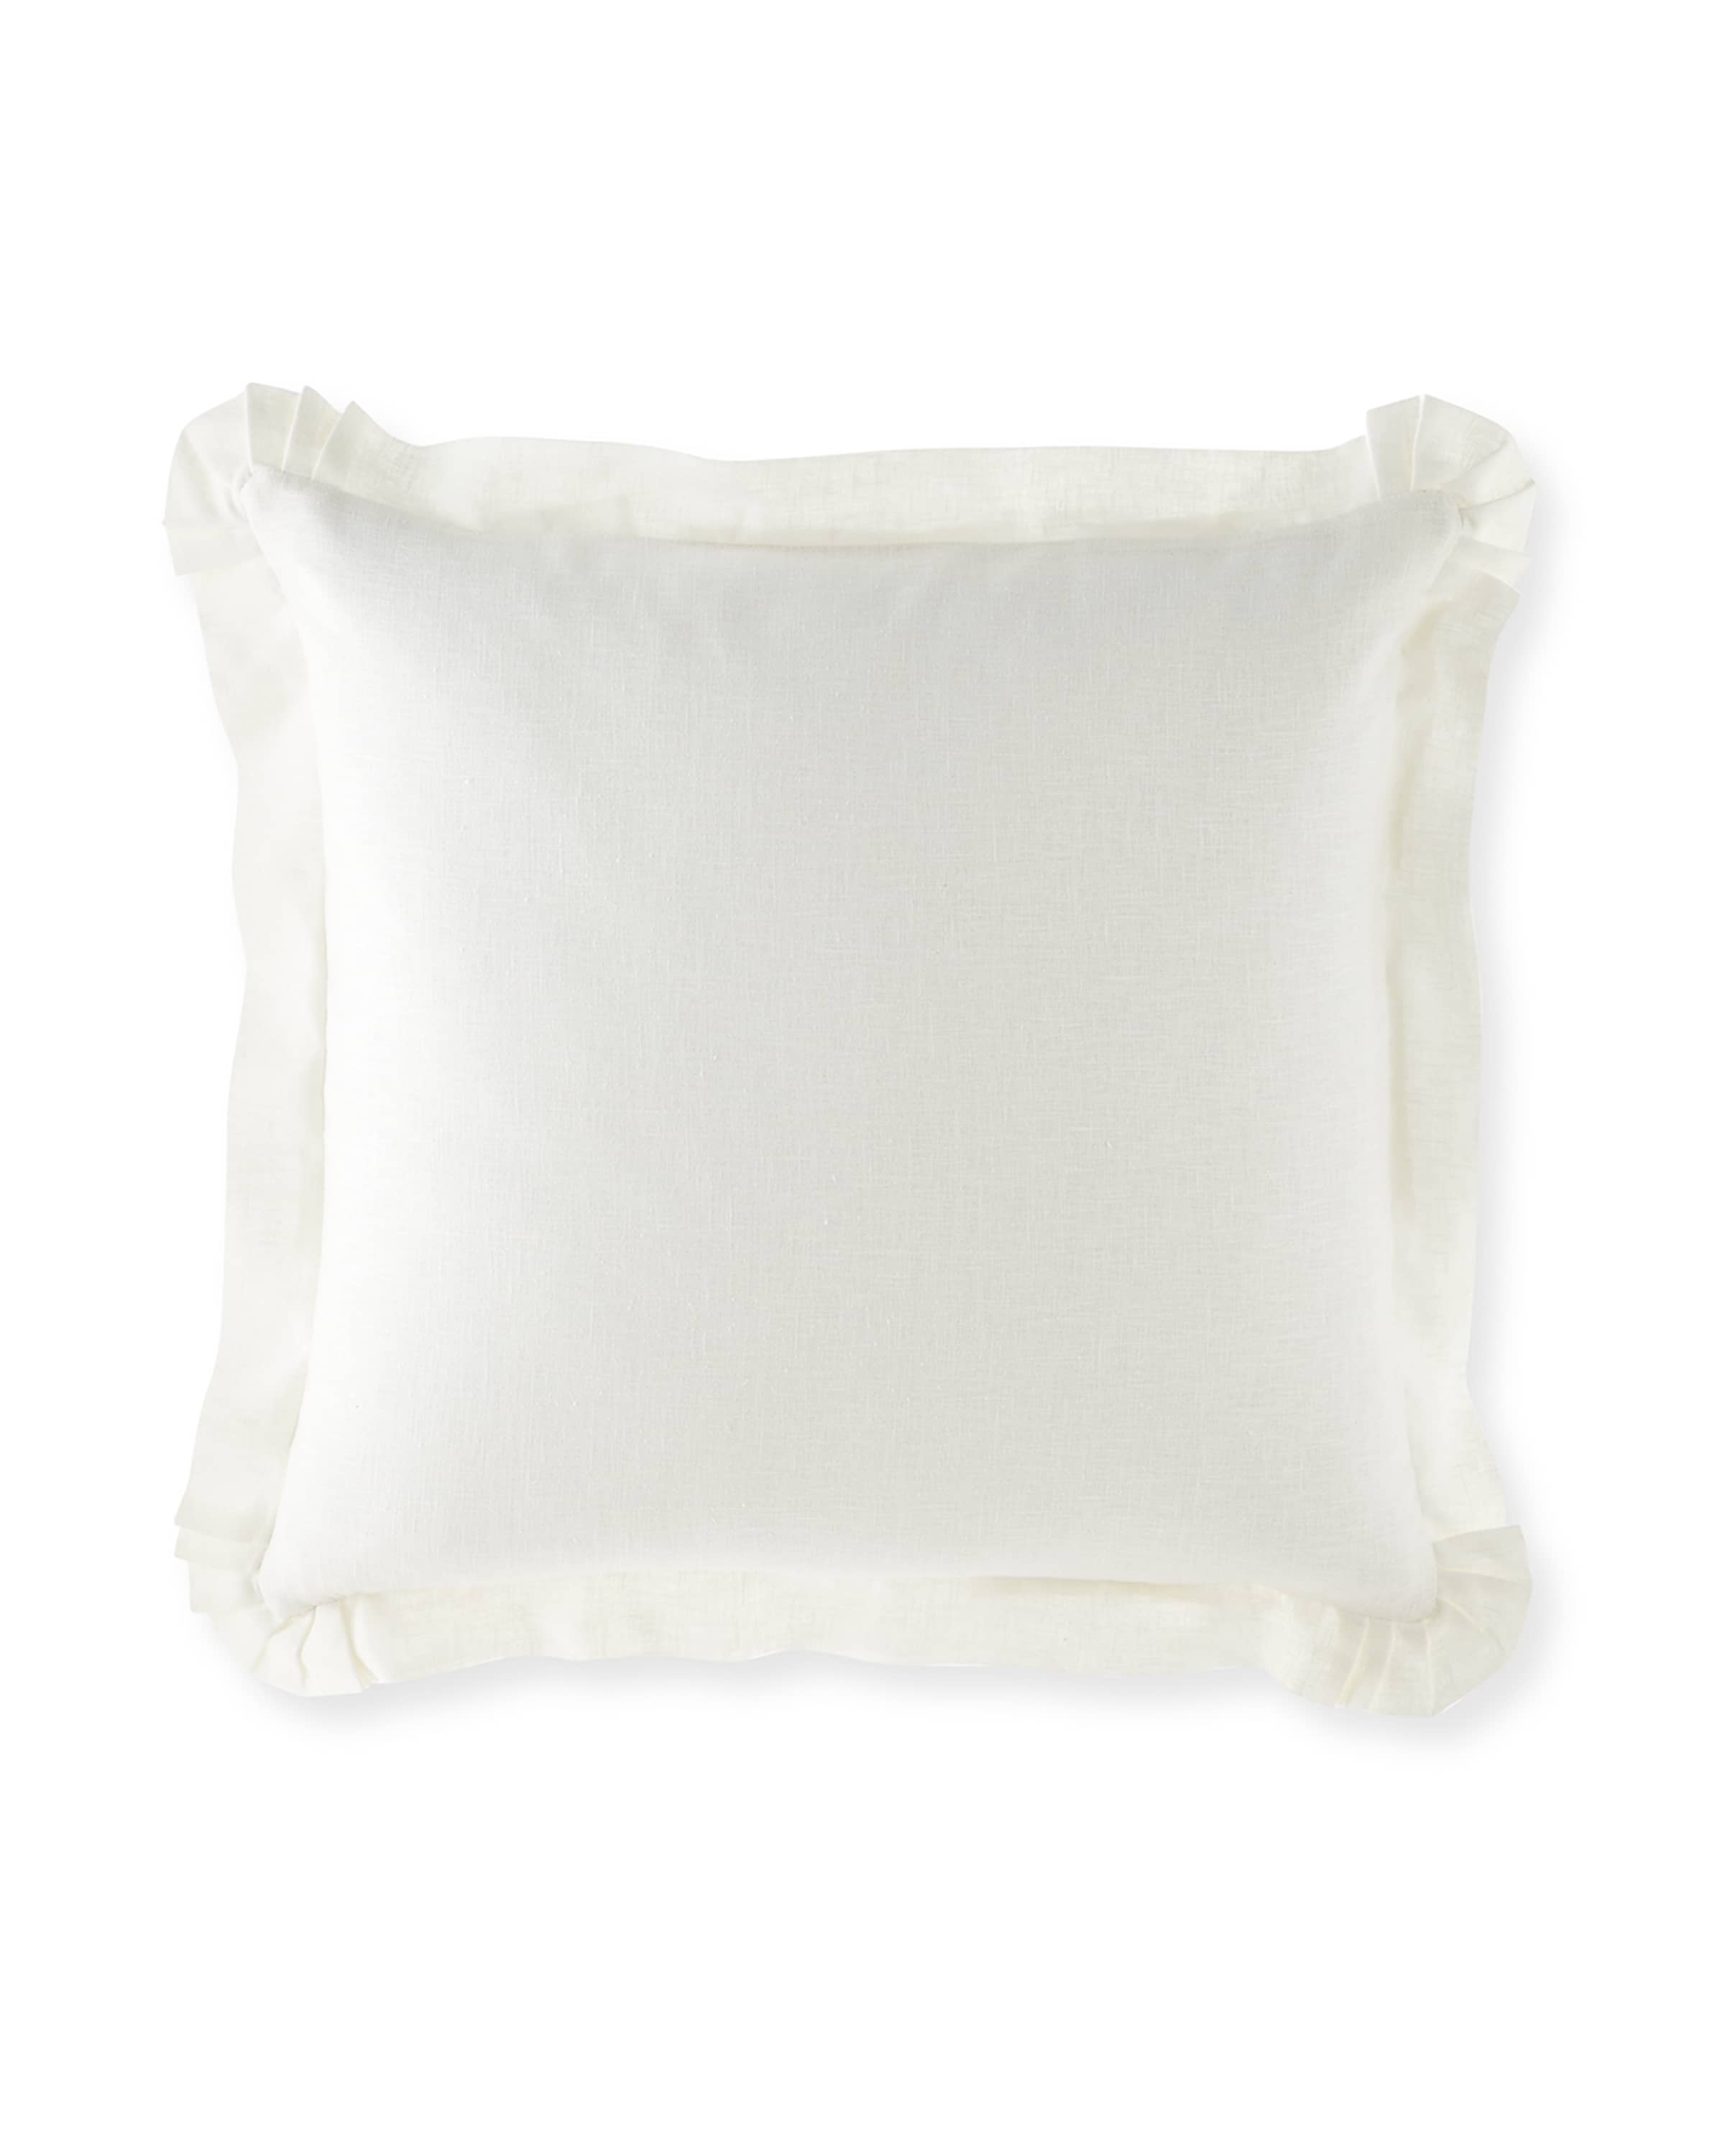 Sherry Kline Home Alyssa 3-Piece Queen Comforter Set and Matching Items ...